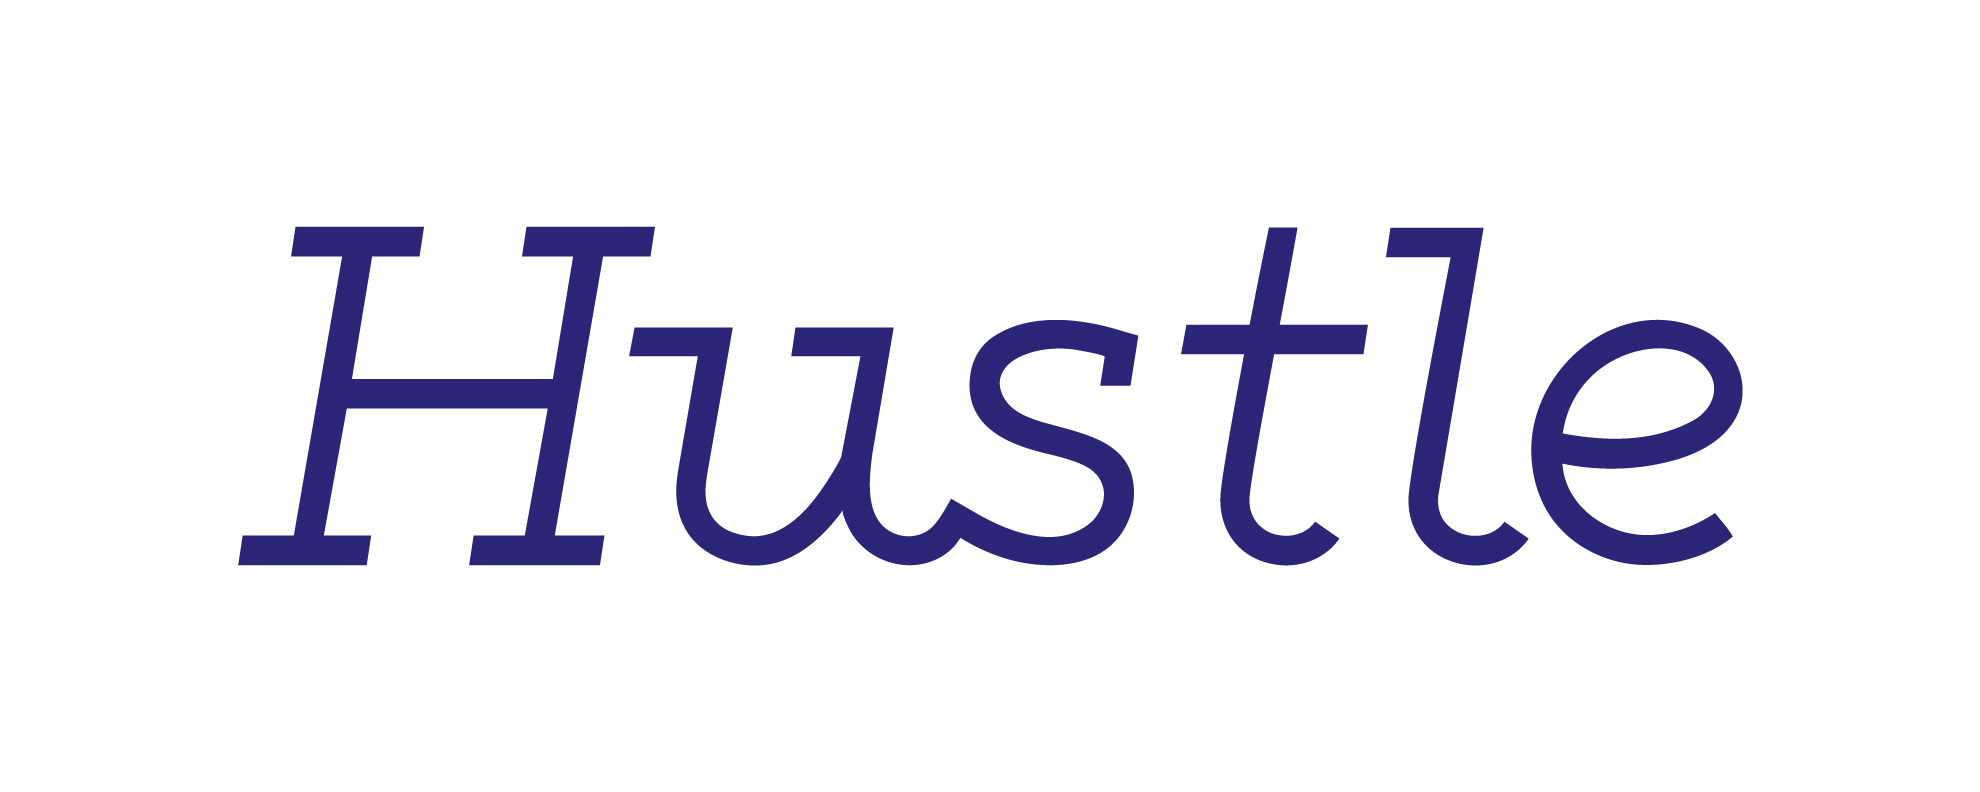 Hustle-logo-in-blue-150dpi.jpg